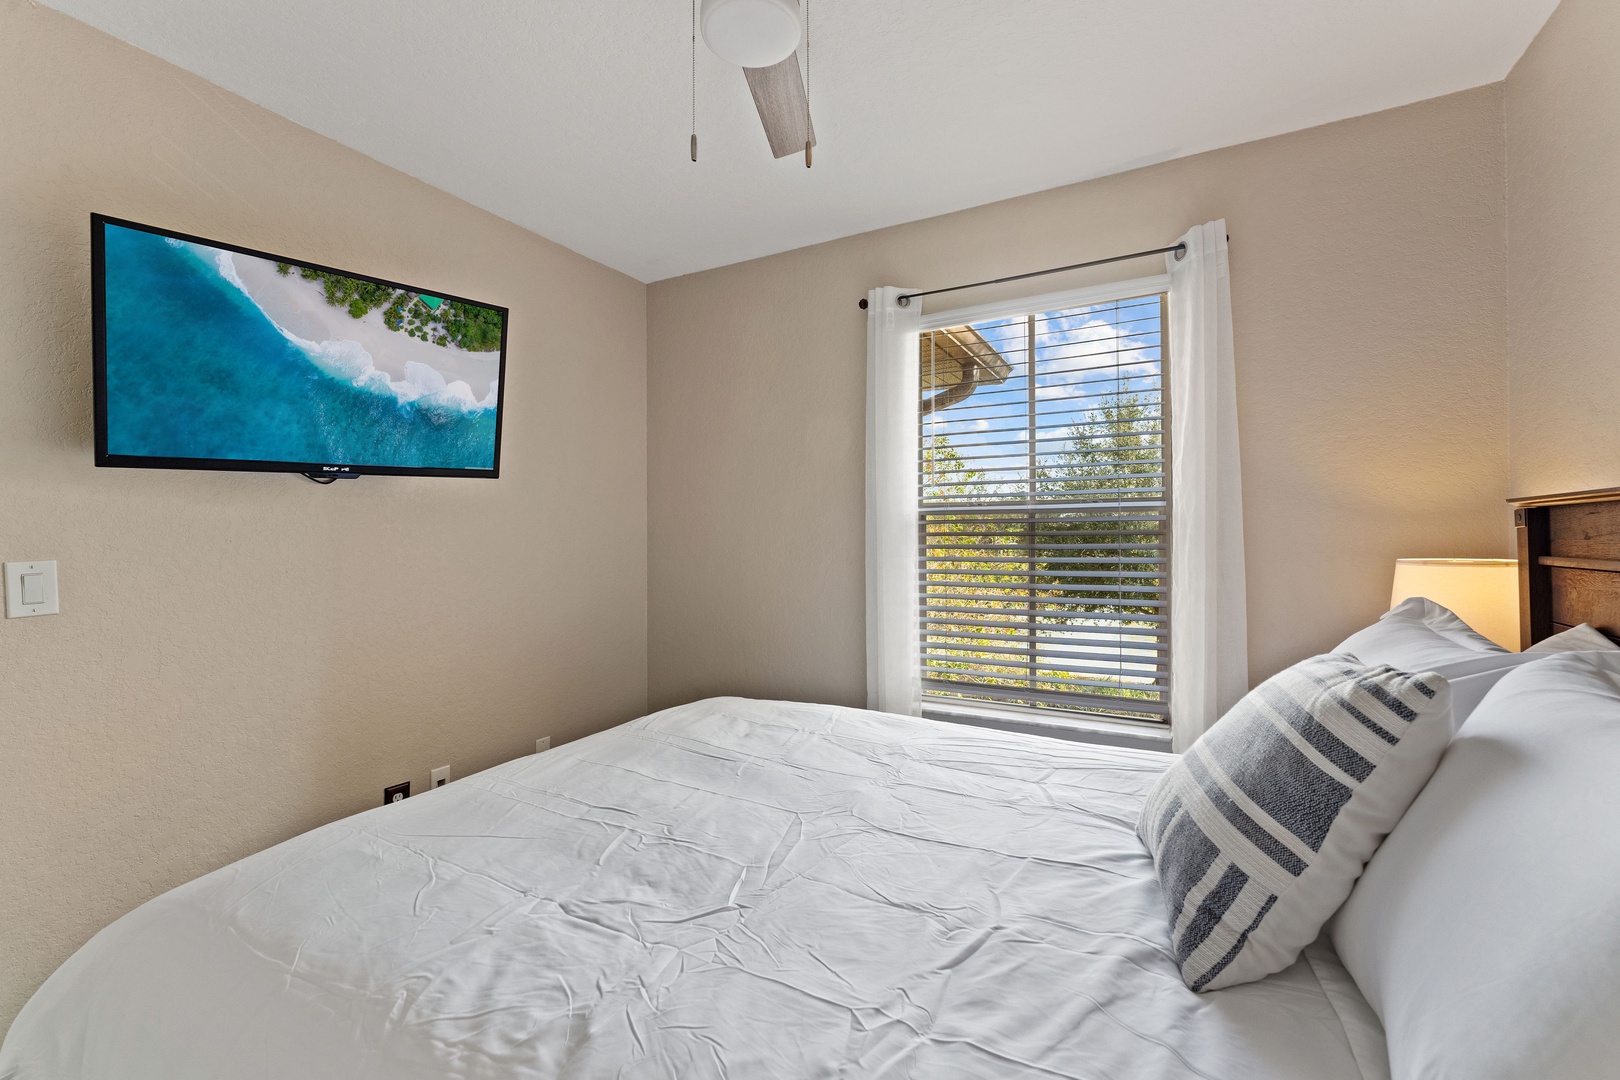 This 2nd floor queen bedroom includes a TV & ceiling fan